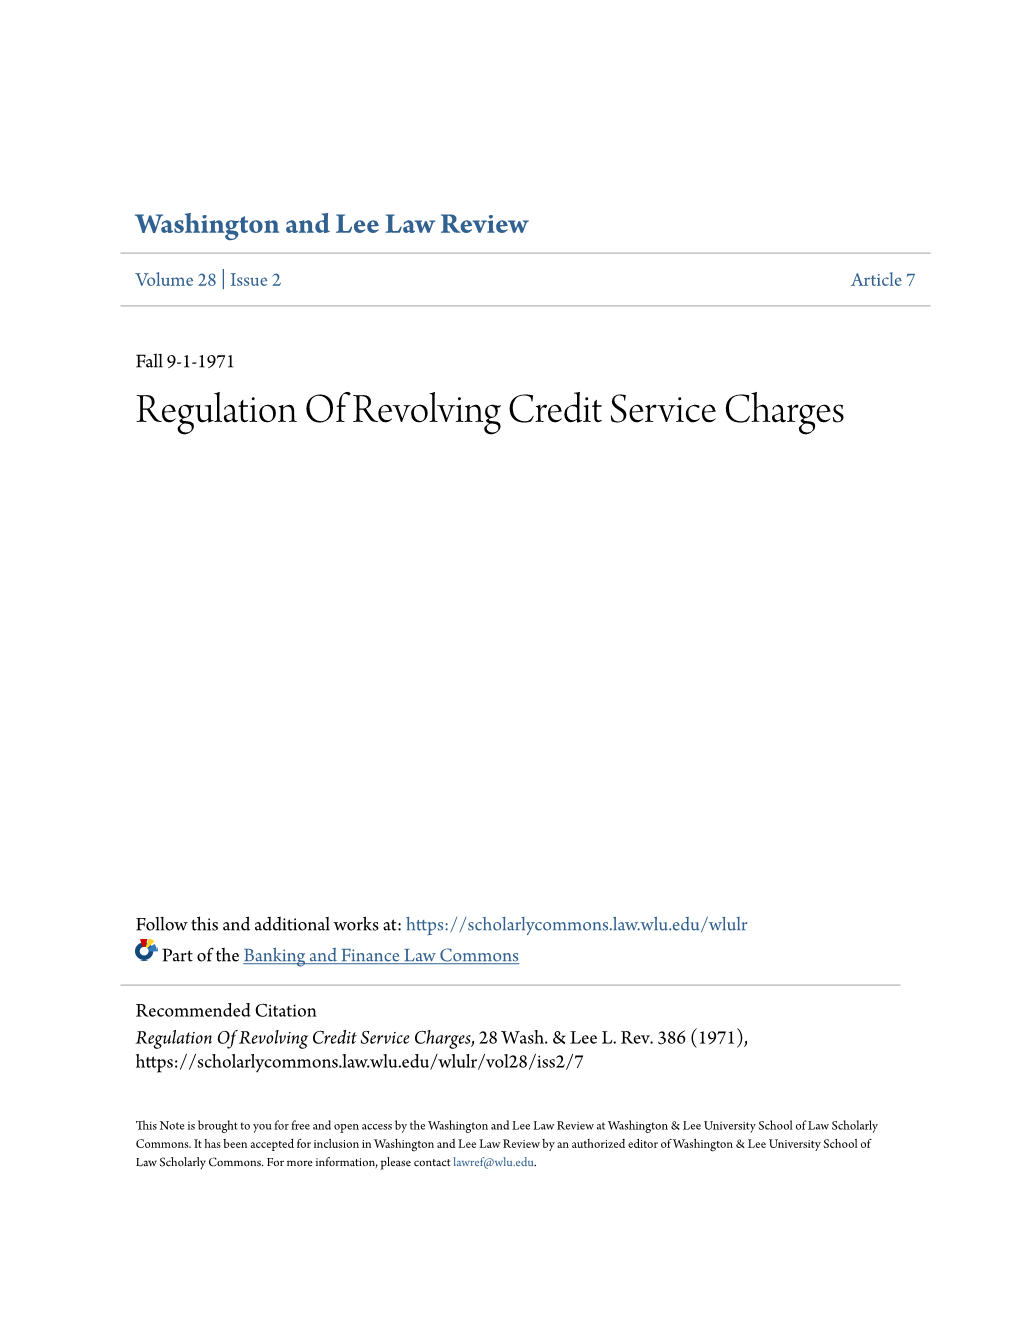 Regulation of Revolving Credit Service Charges